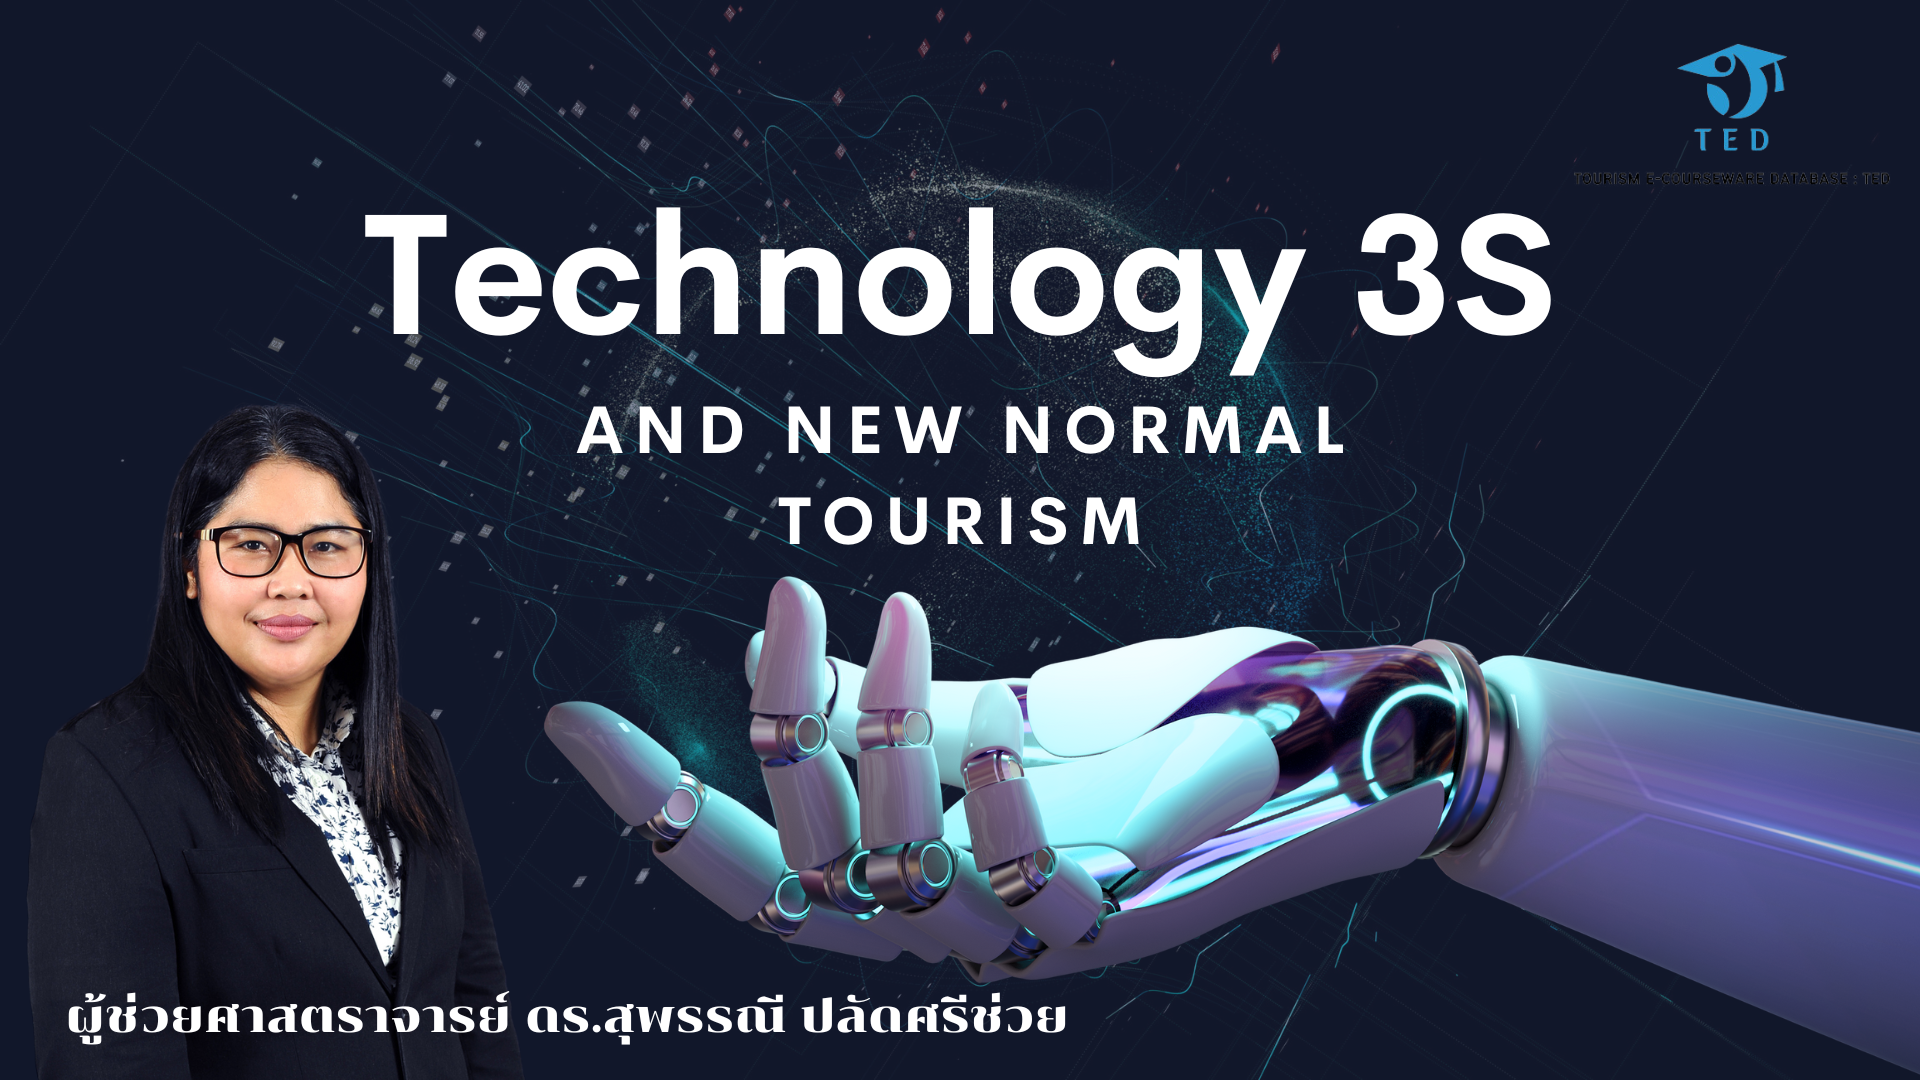 Futuristic Technology Conference 111resentation